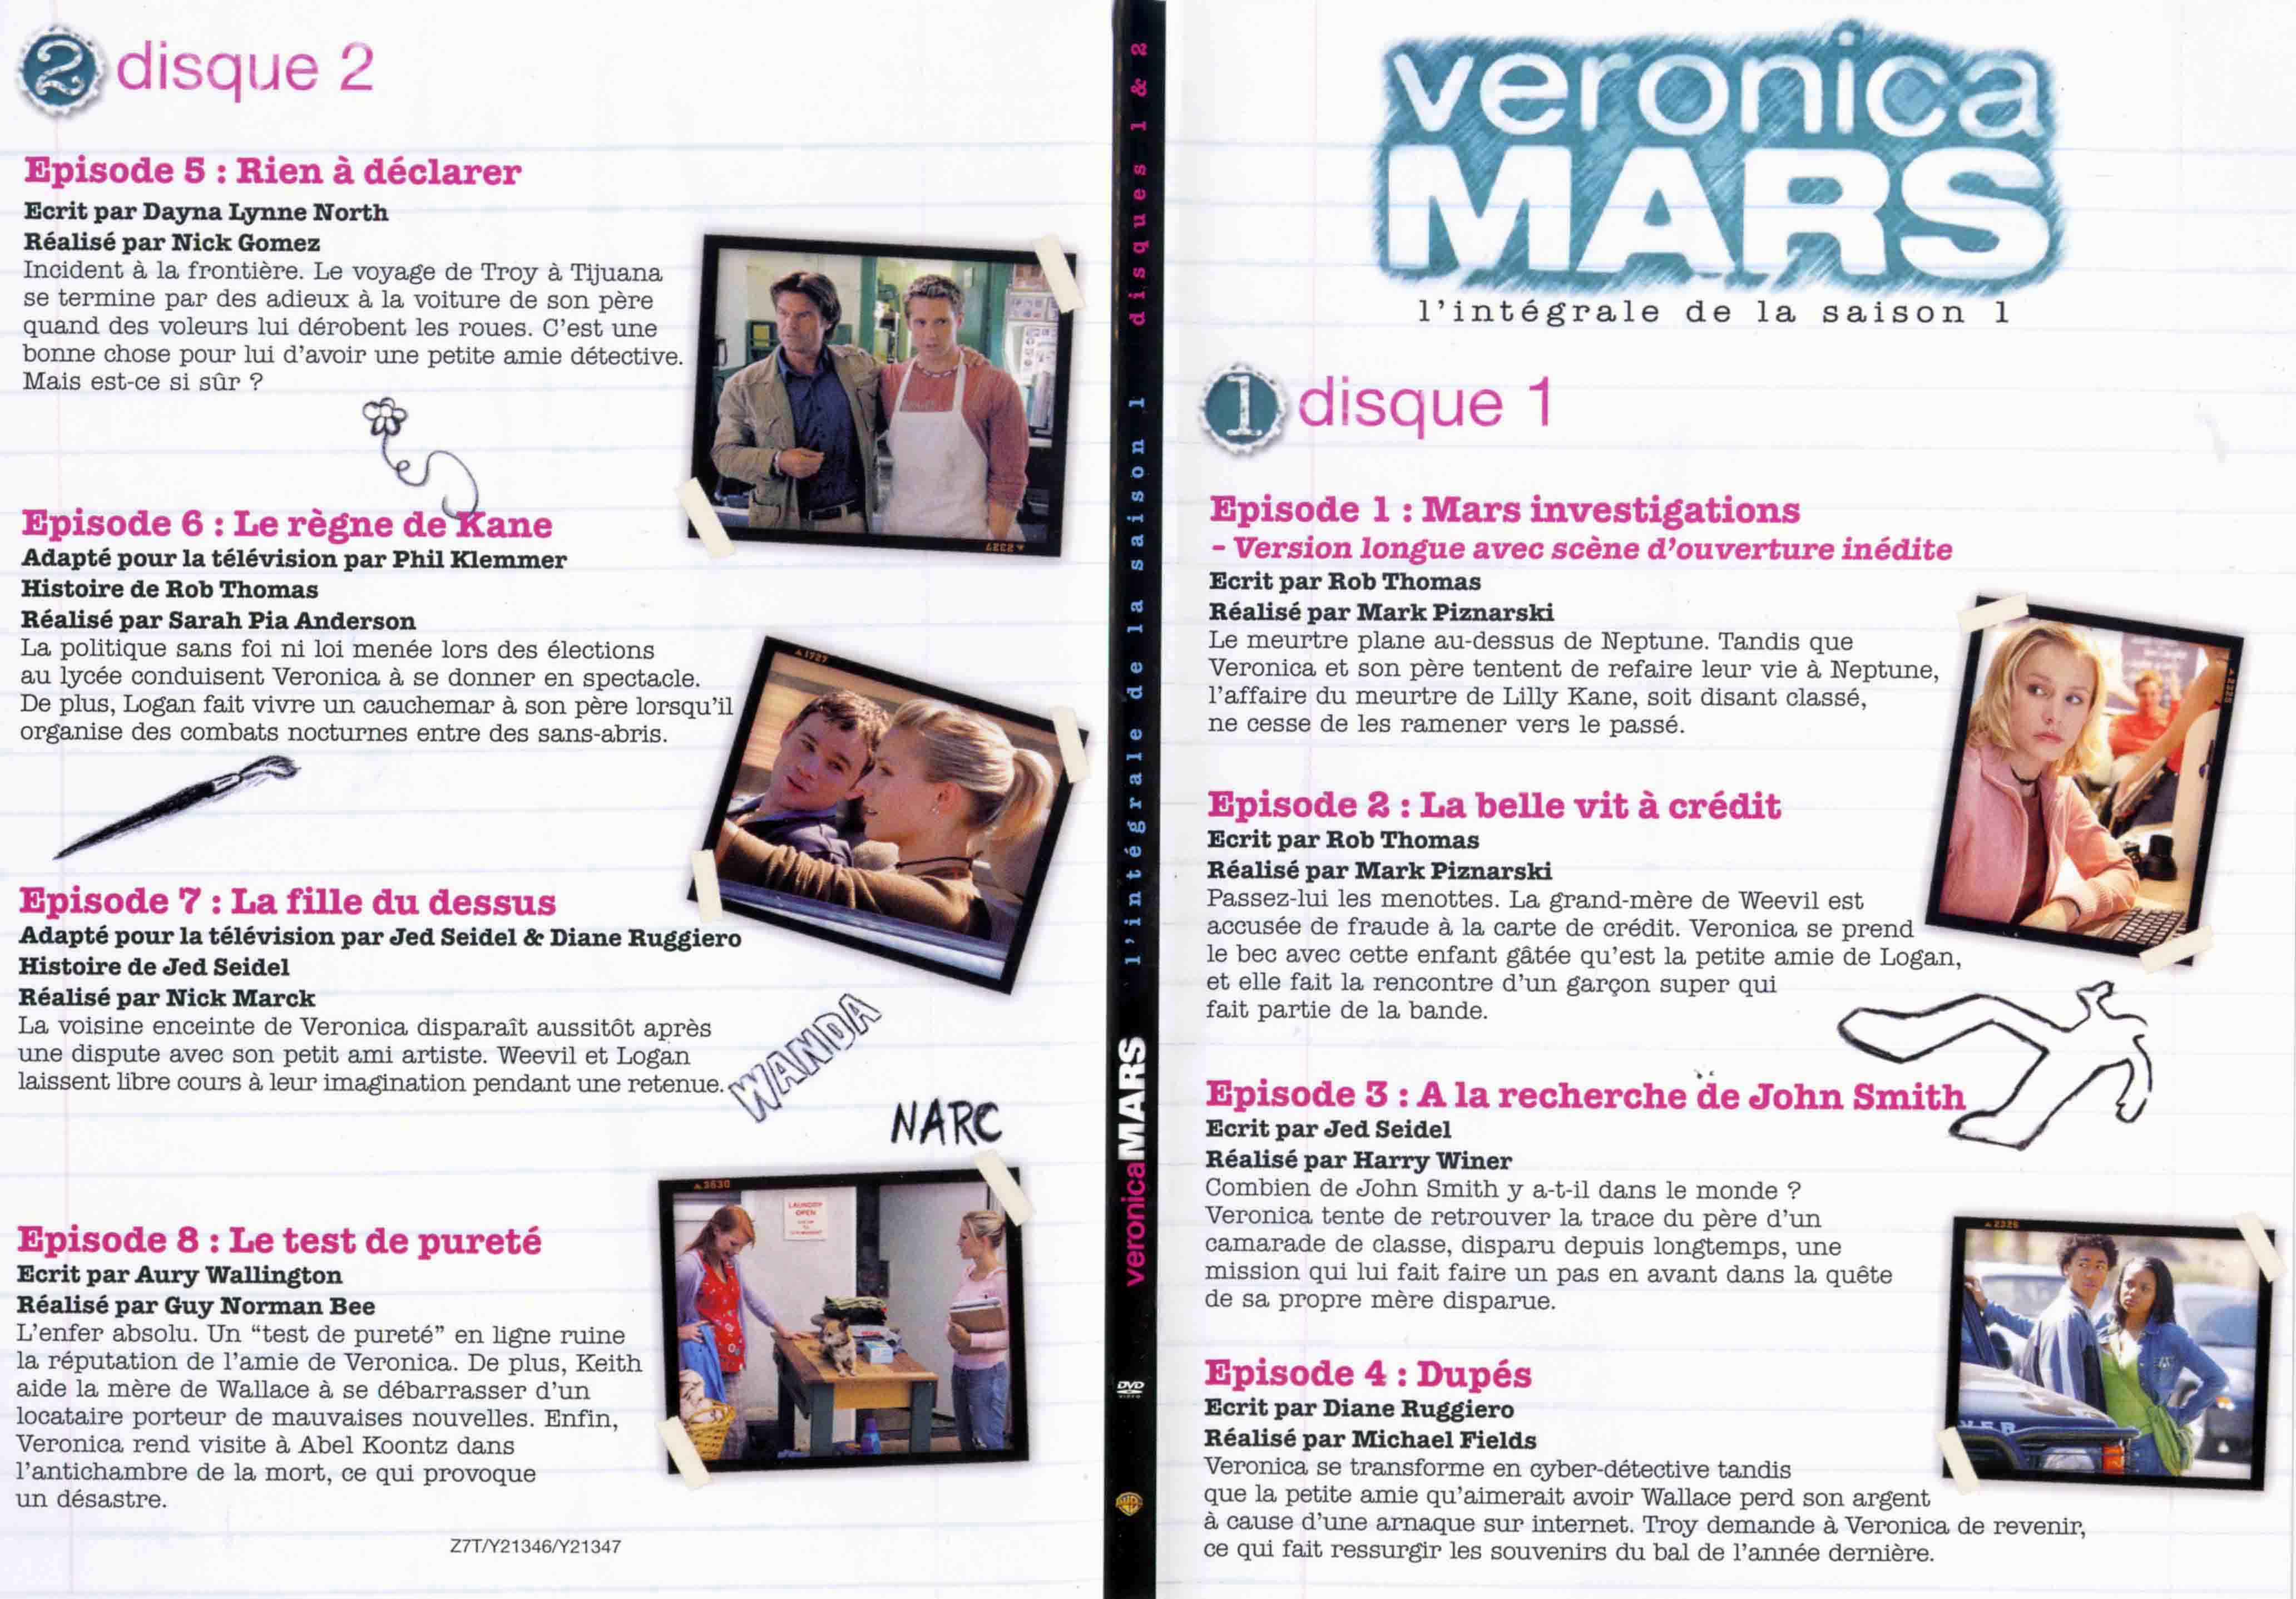 Jaquette DVD Veronica Mars Saison 1 DVD 1